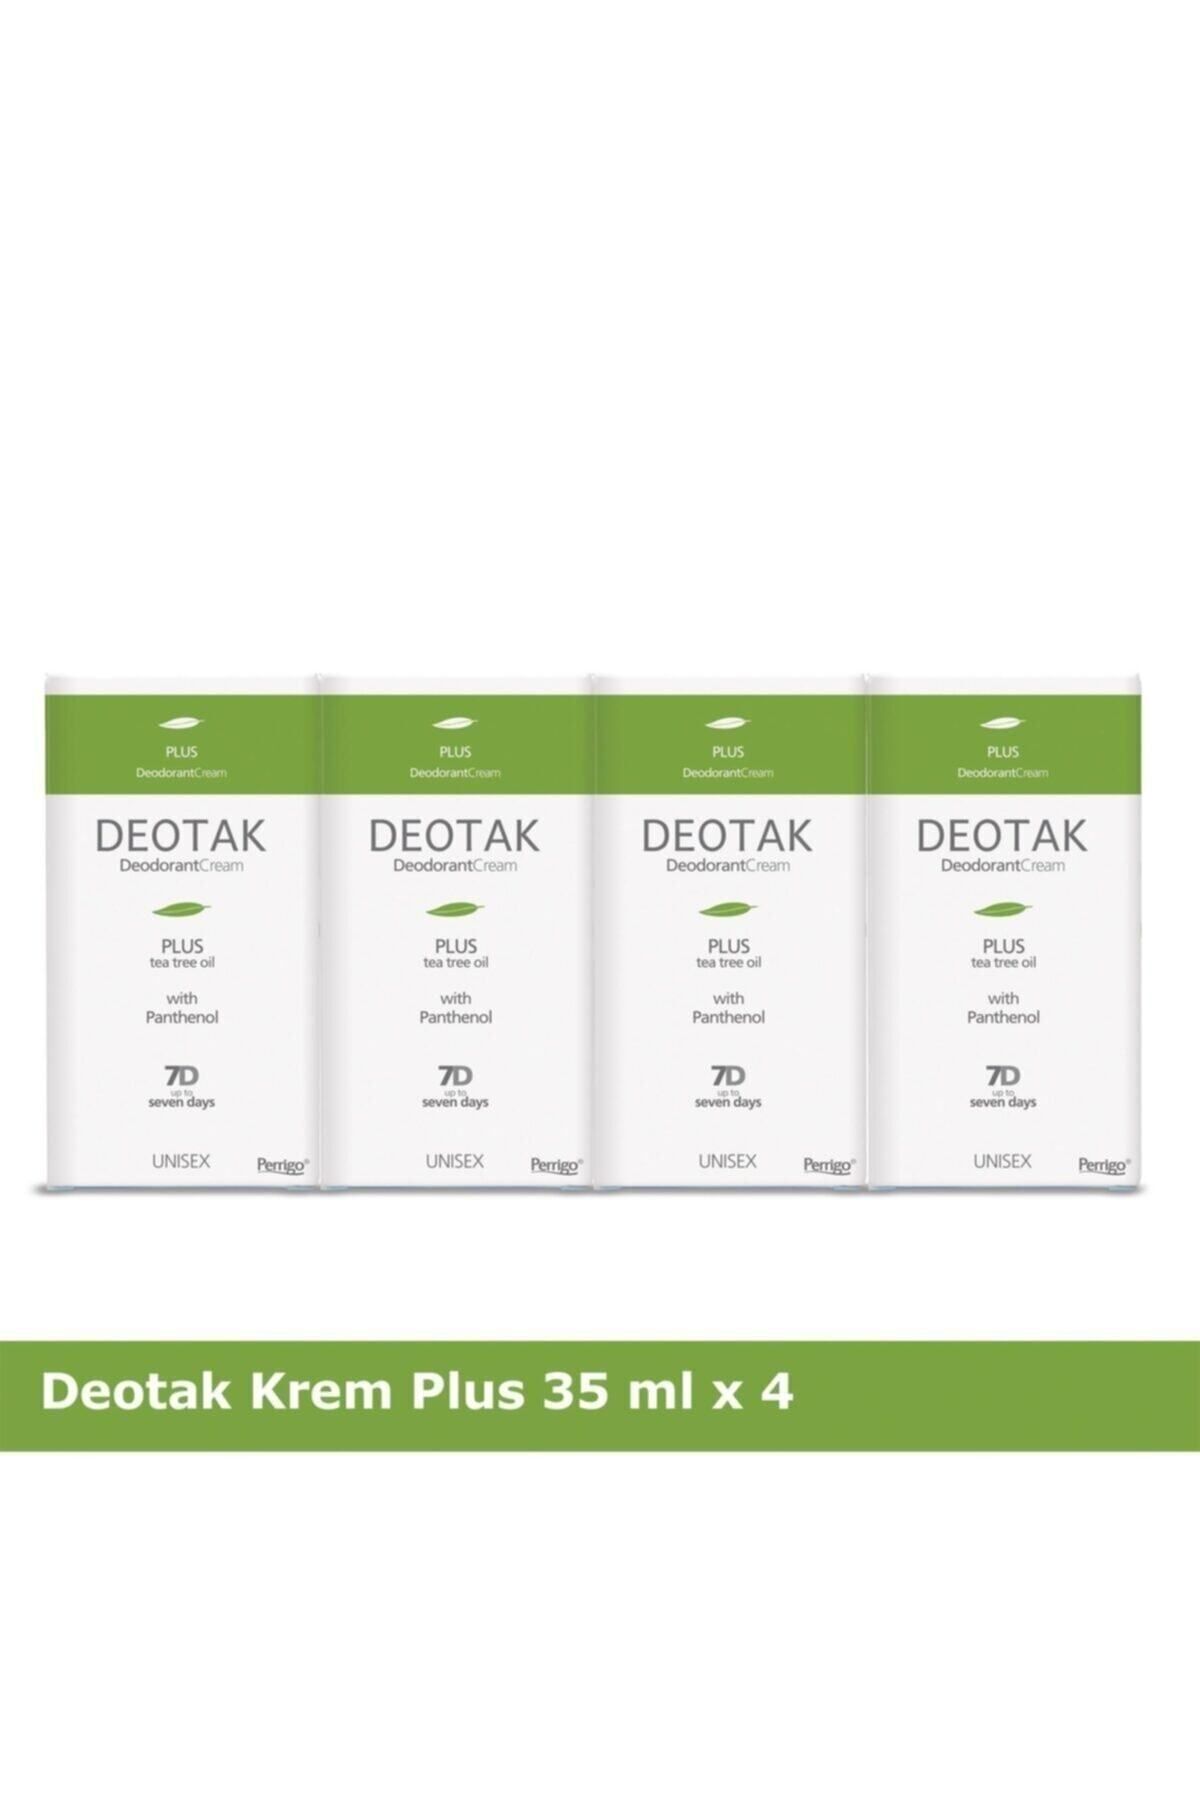 Deotak Krem Deodorant Plus X 4